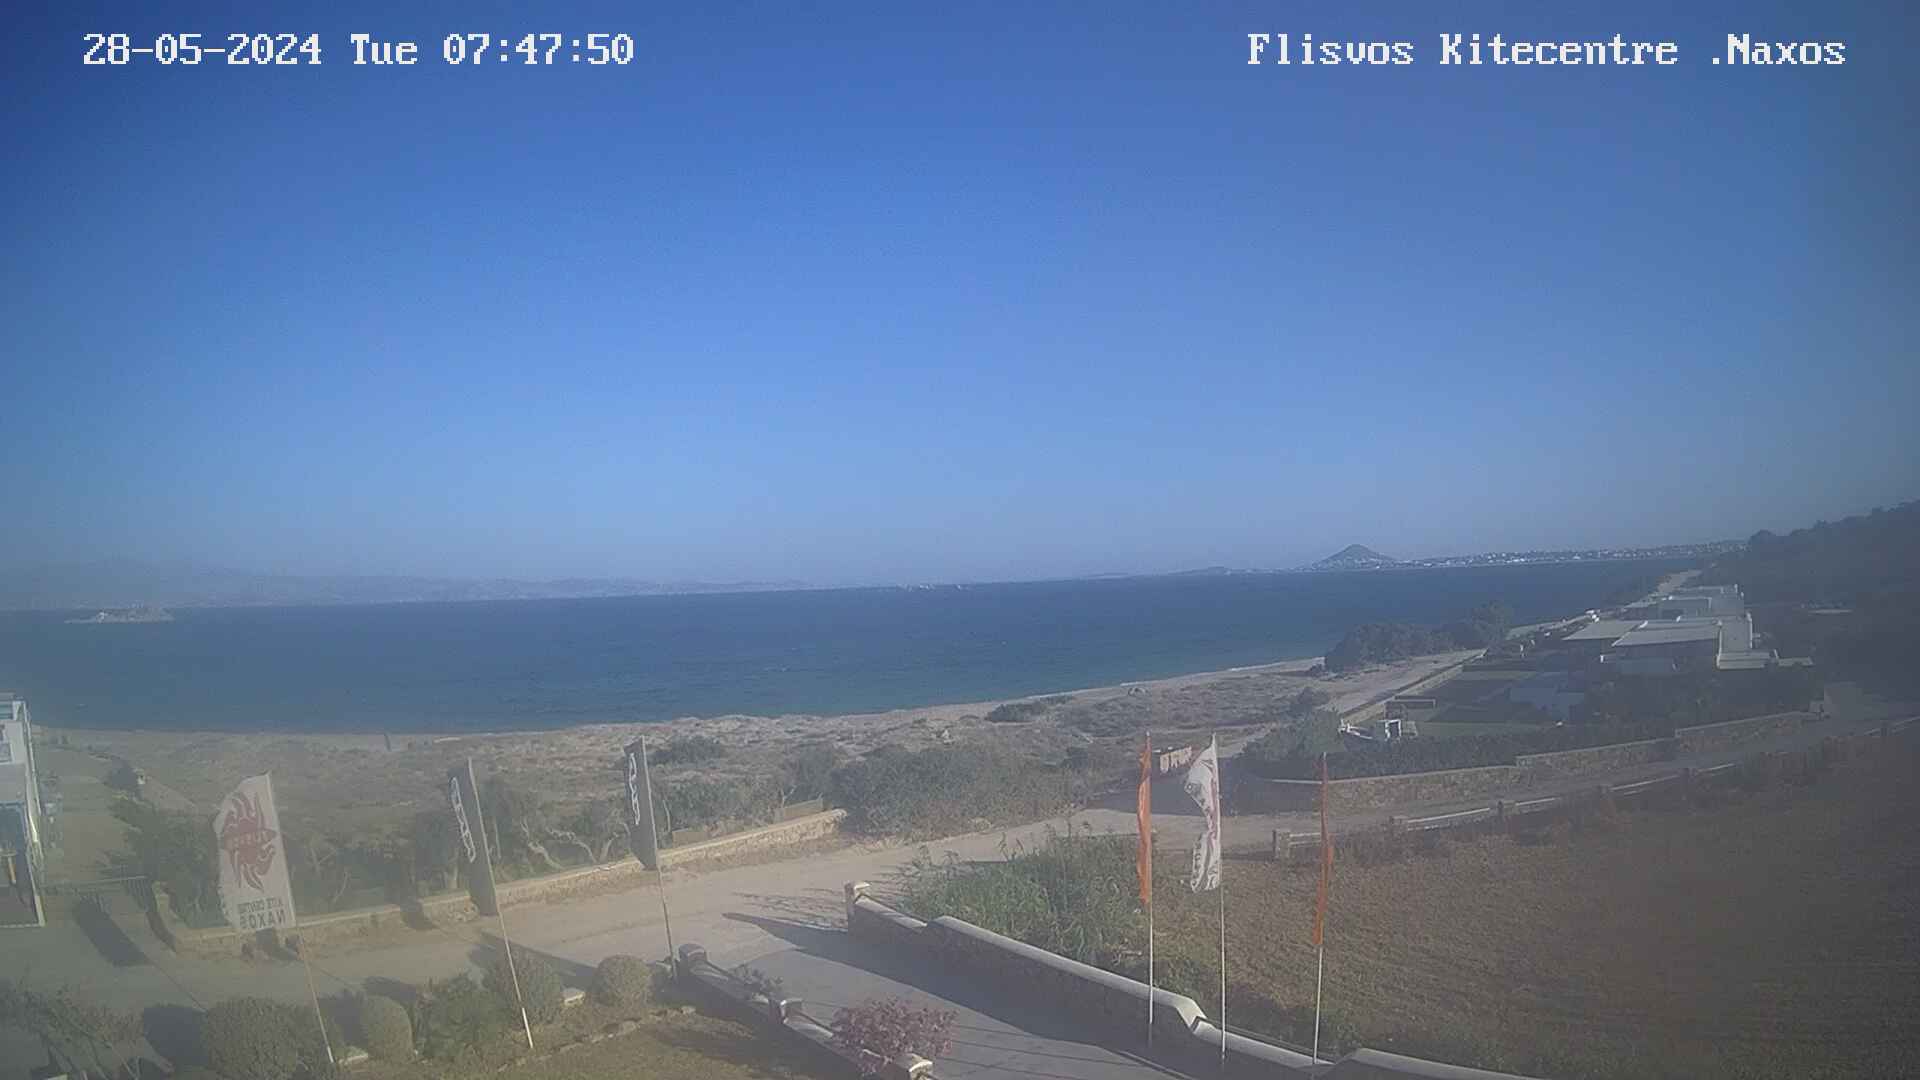 Naxos Tir. 07:48